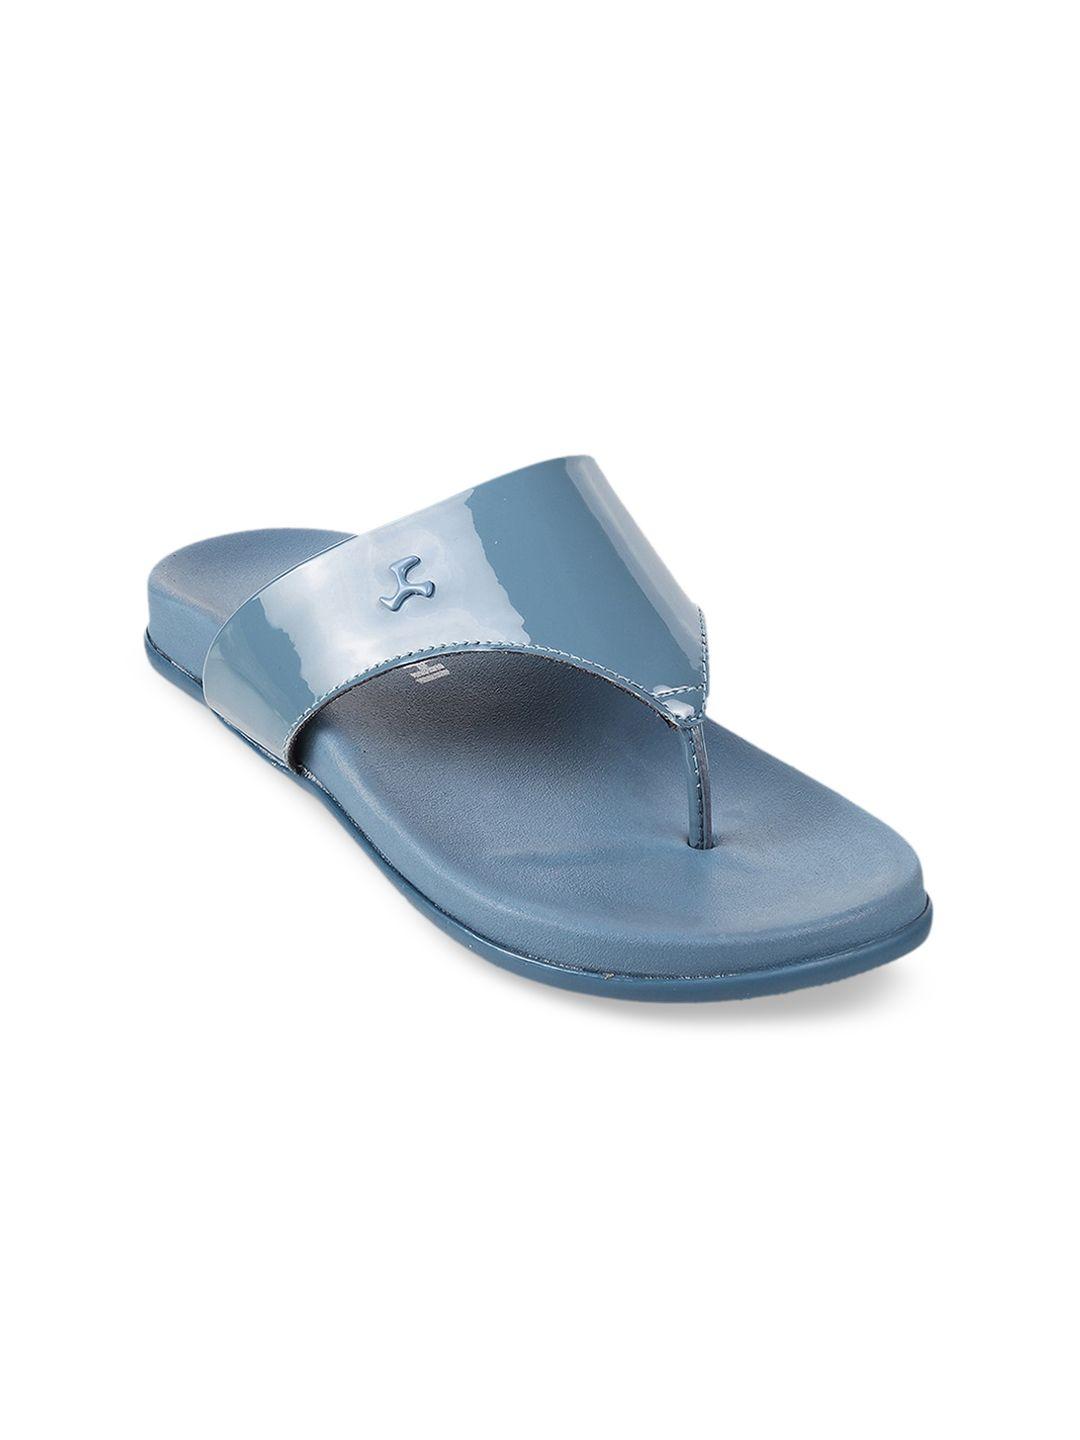 mochi women blue comfort sandals